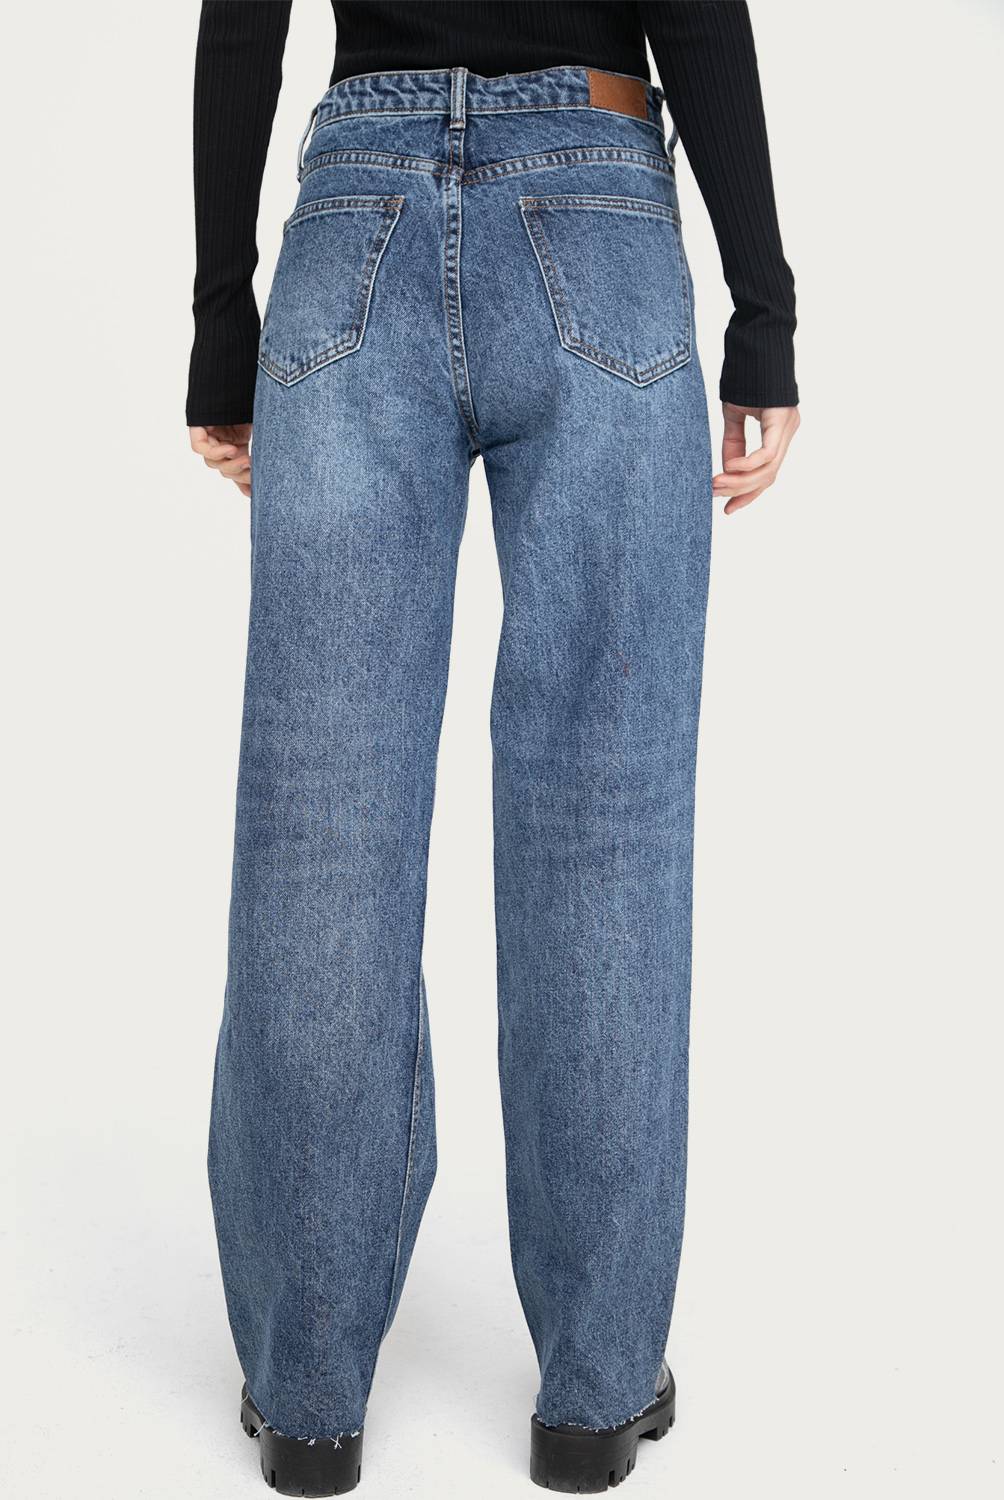 BASEMENT - Jeans Straight Tiro Alto Mujer